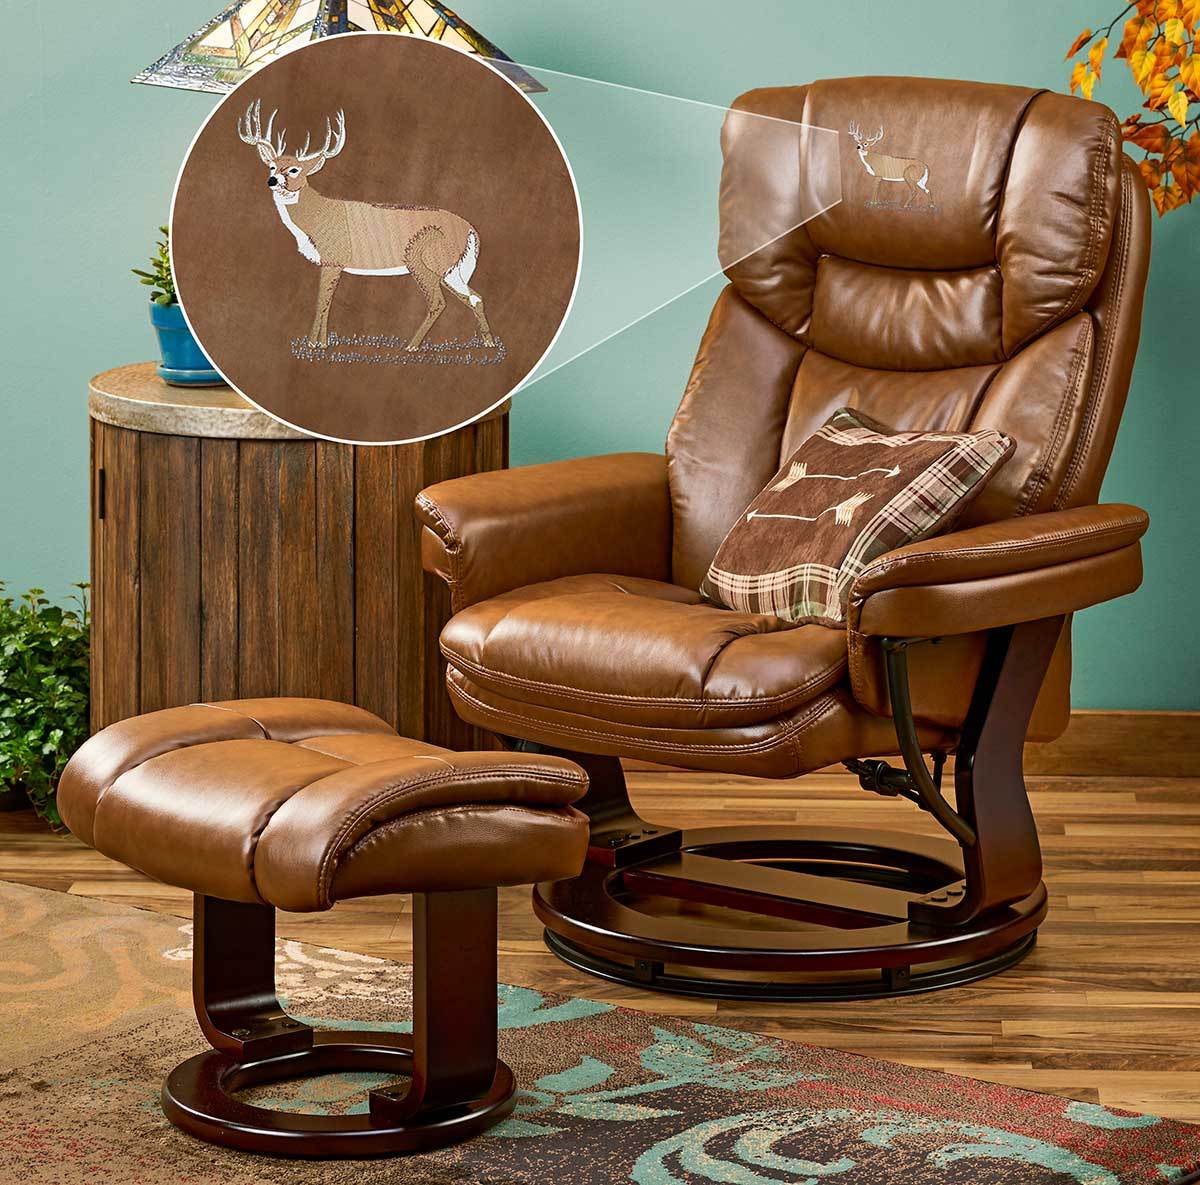 Whitetail Deer Swivel Chair & Stool - Wild Wings